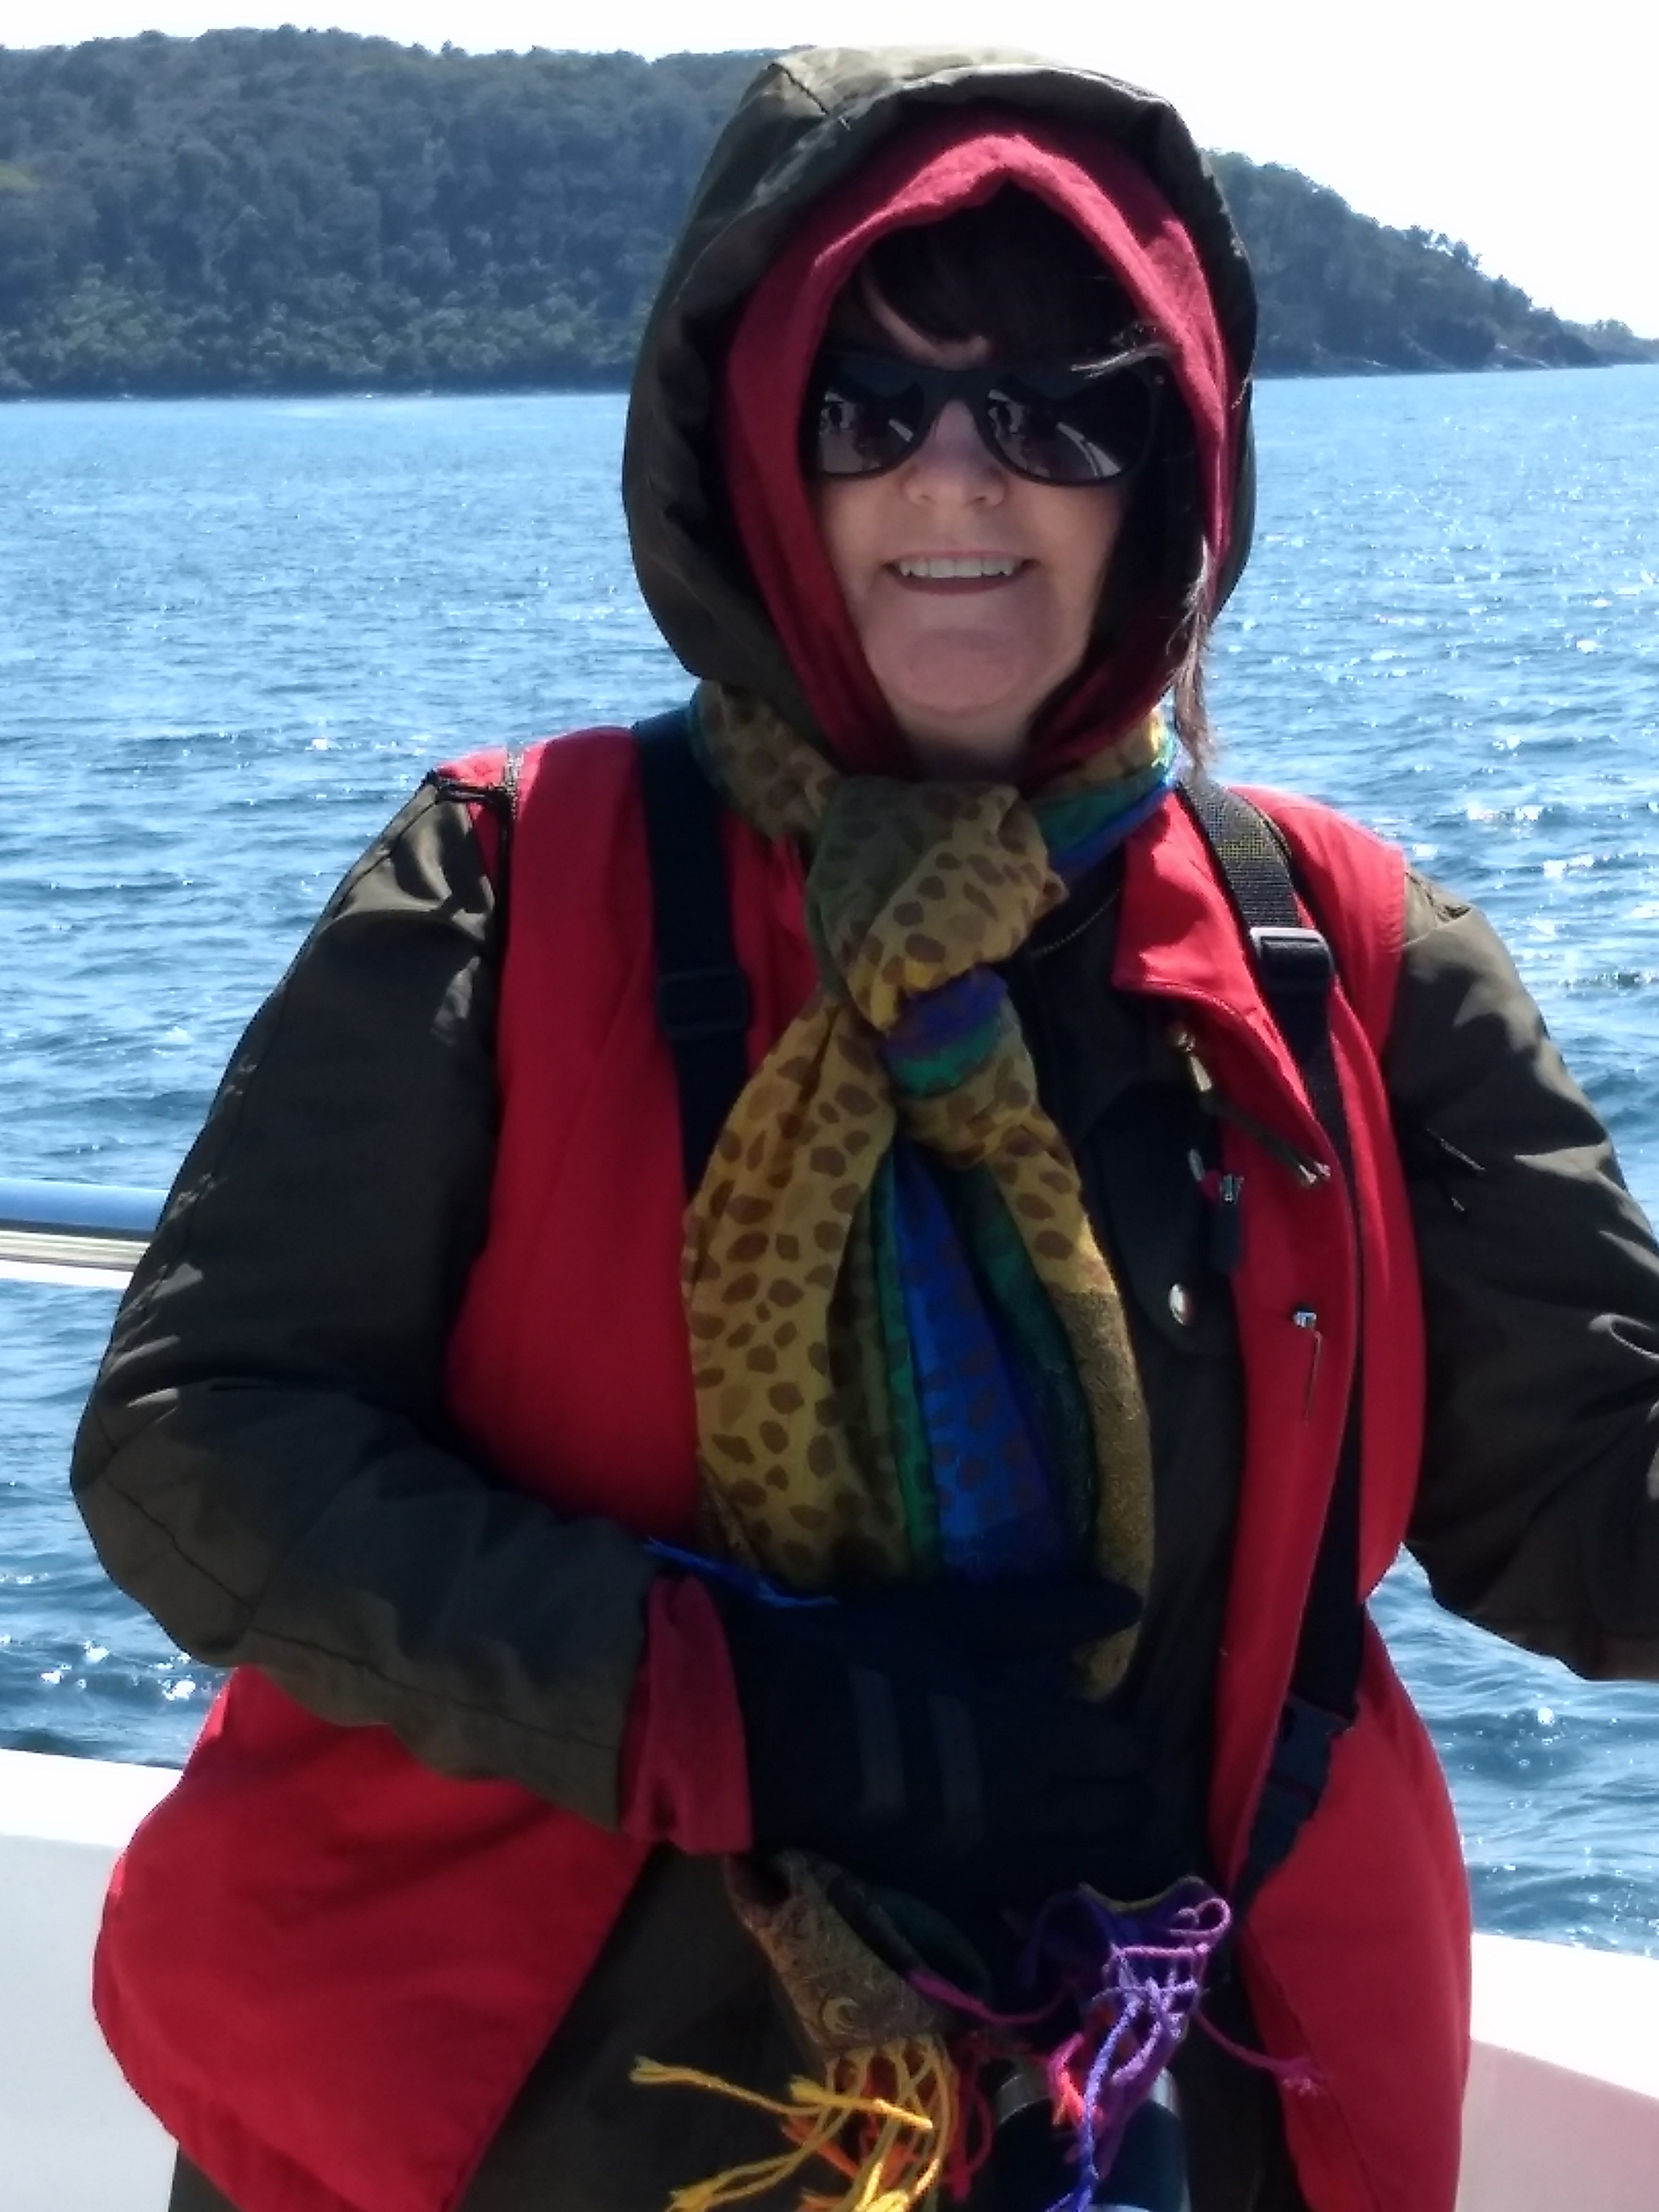 On Milford Sound